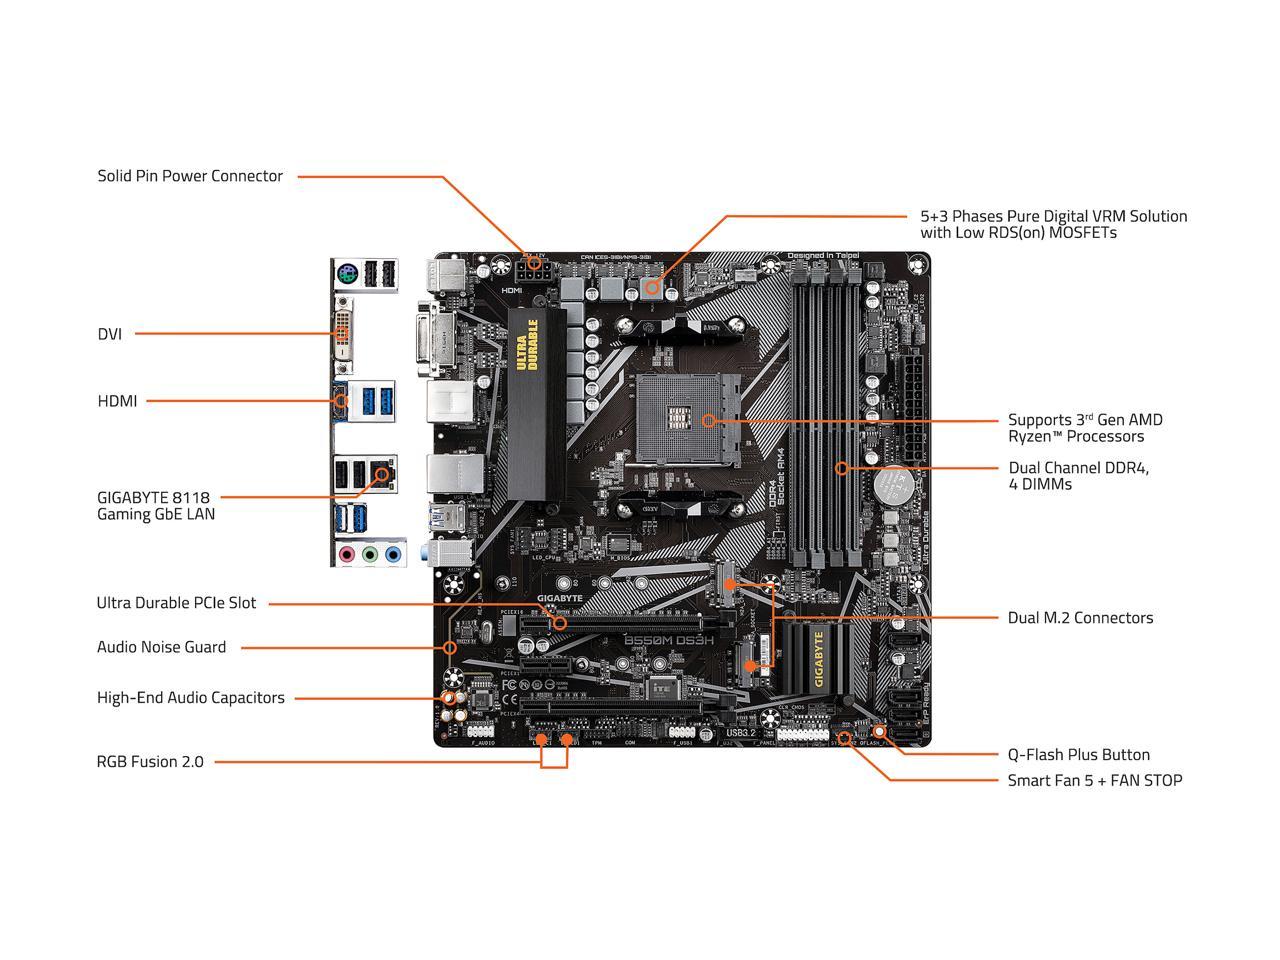 GIGABYTE B550M DS3H AM4 AMD B550 Micro-ATX Motherboard with Dual M.2, SATA 6Gb/s, USB 3.2 Gen 1, PCIe 4.0